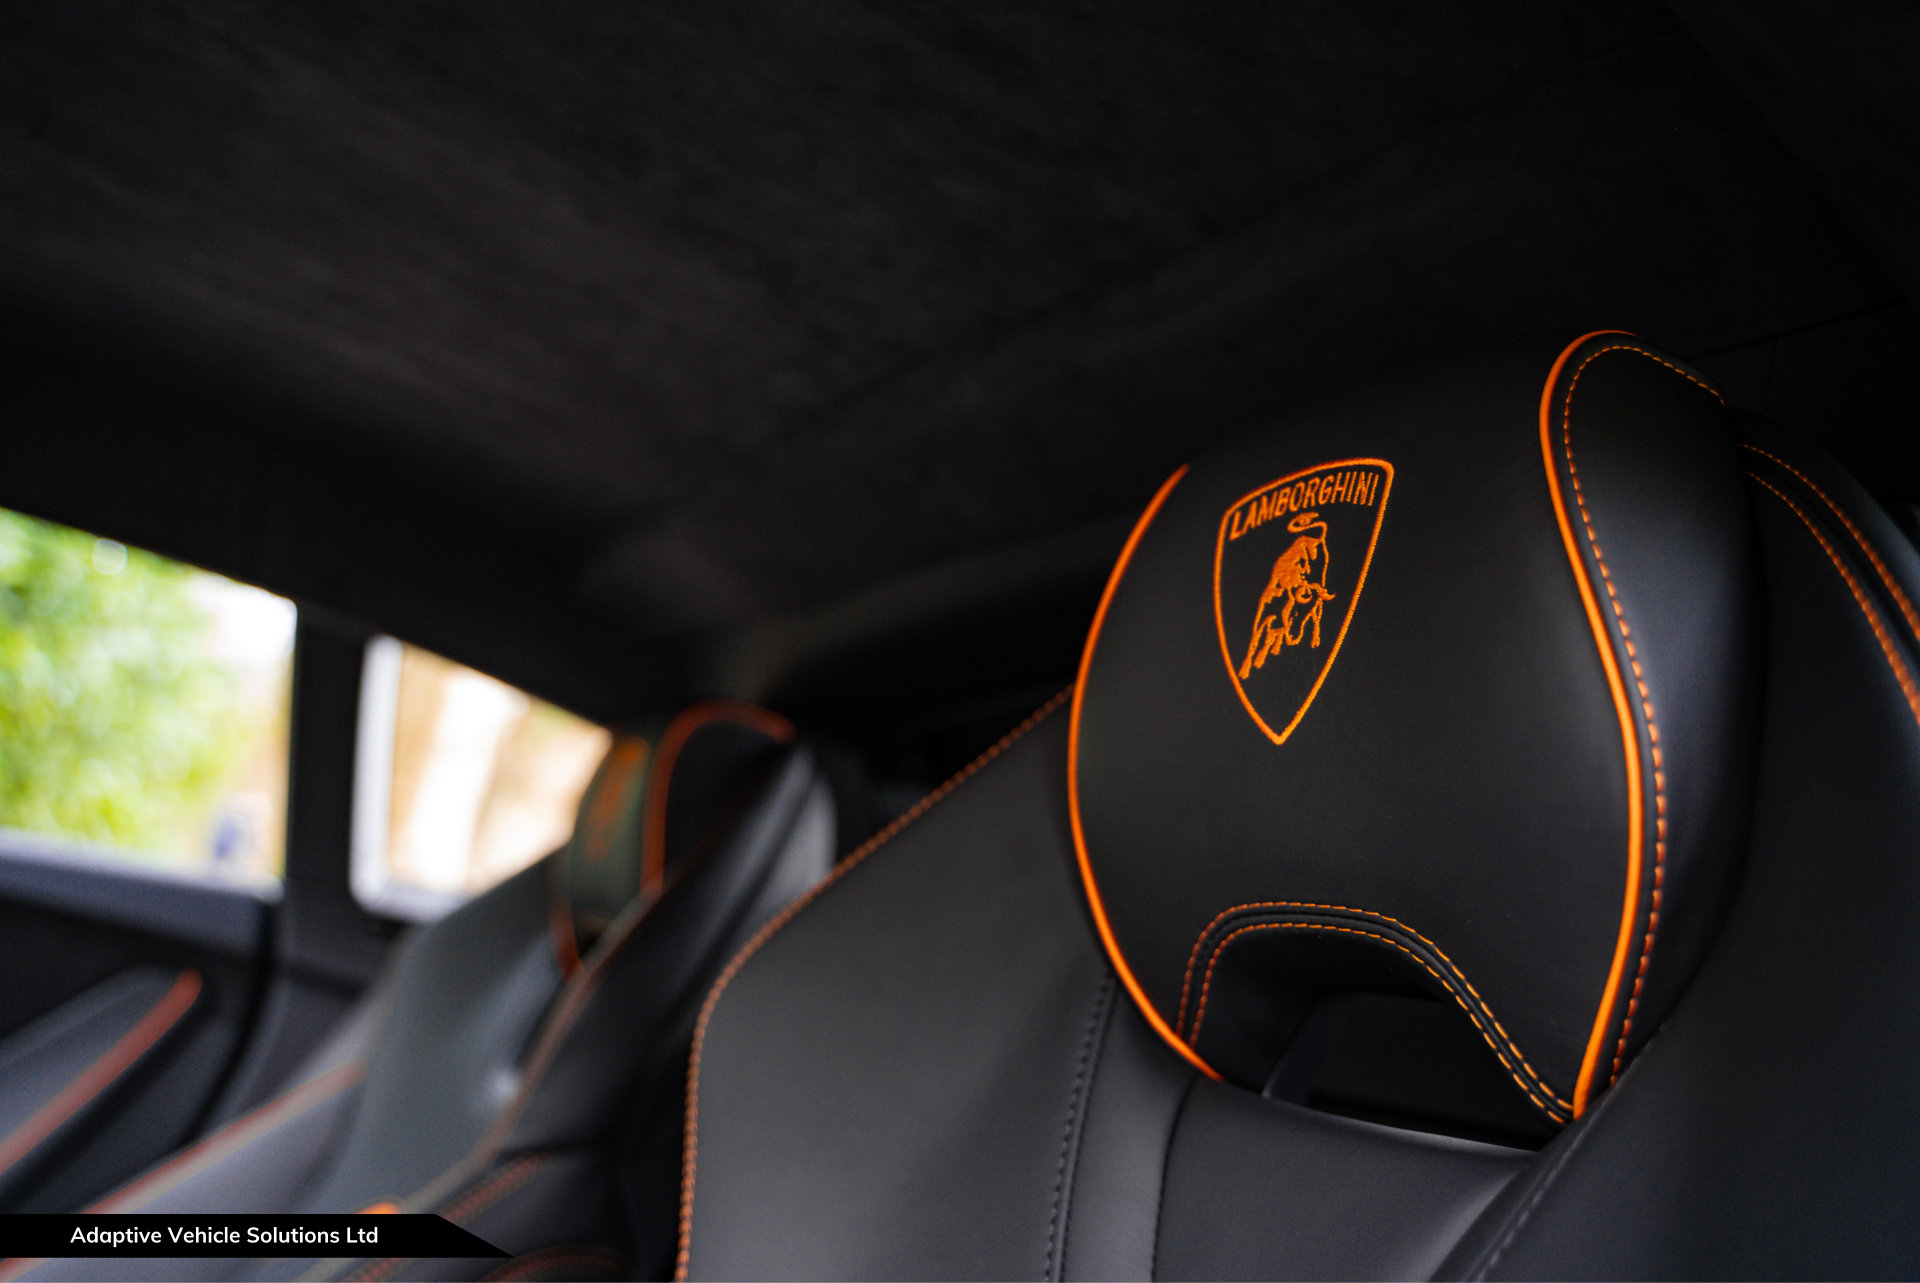 2020 Lamborghini Huracan Evo Coupe Grigio Telesto embossed crests on headrest